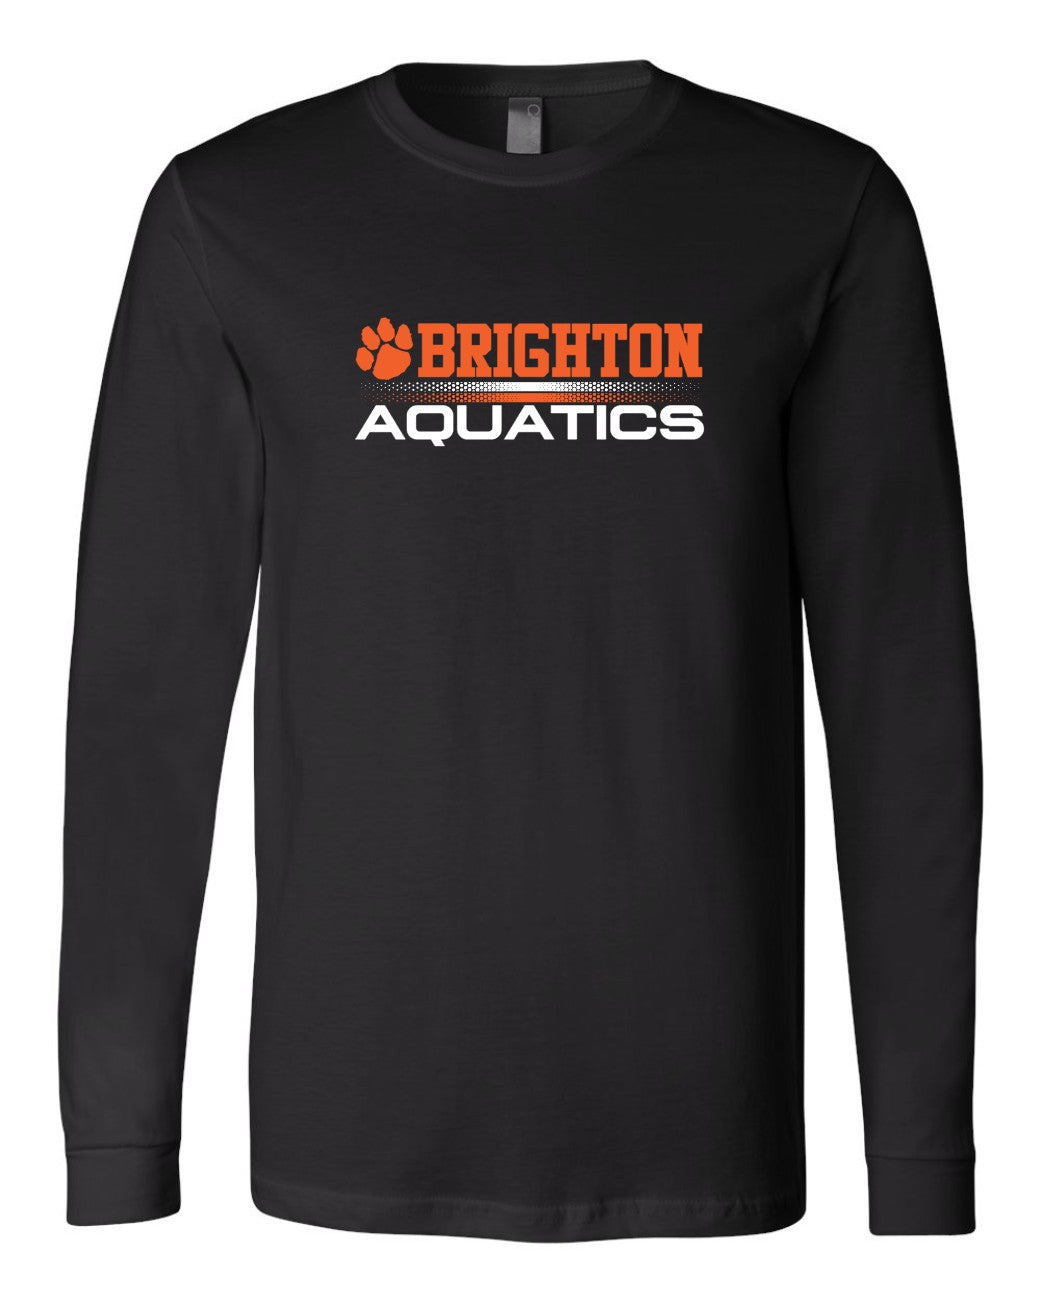 Brighton Aquatics Long Sleeve Premium Tee